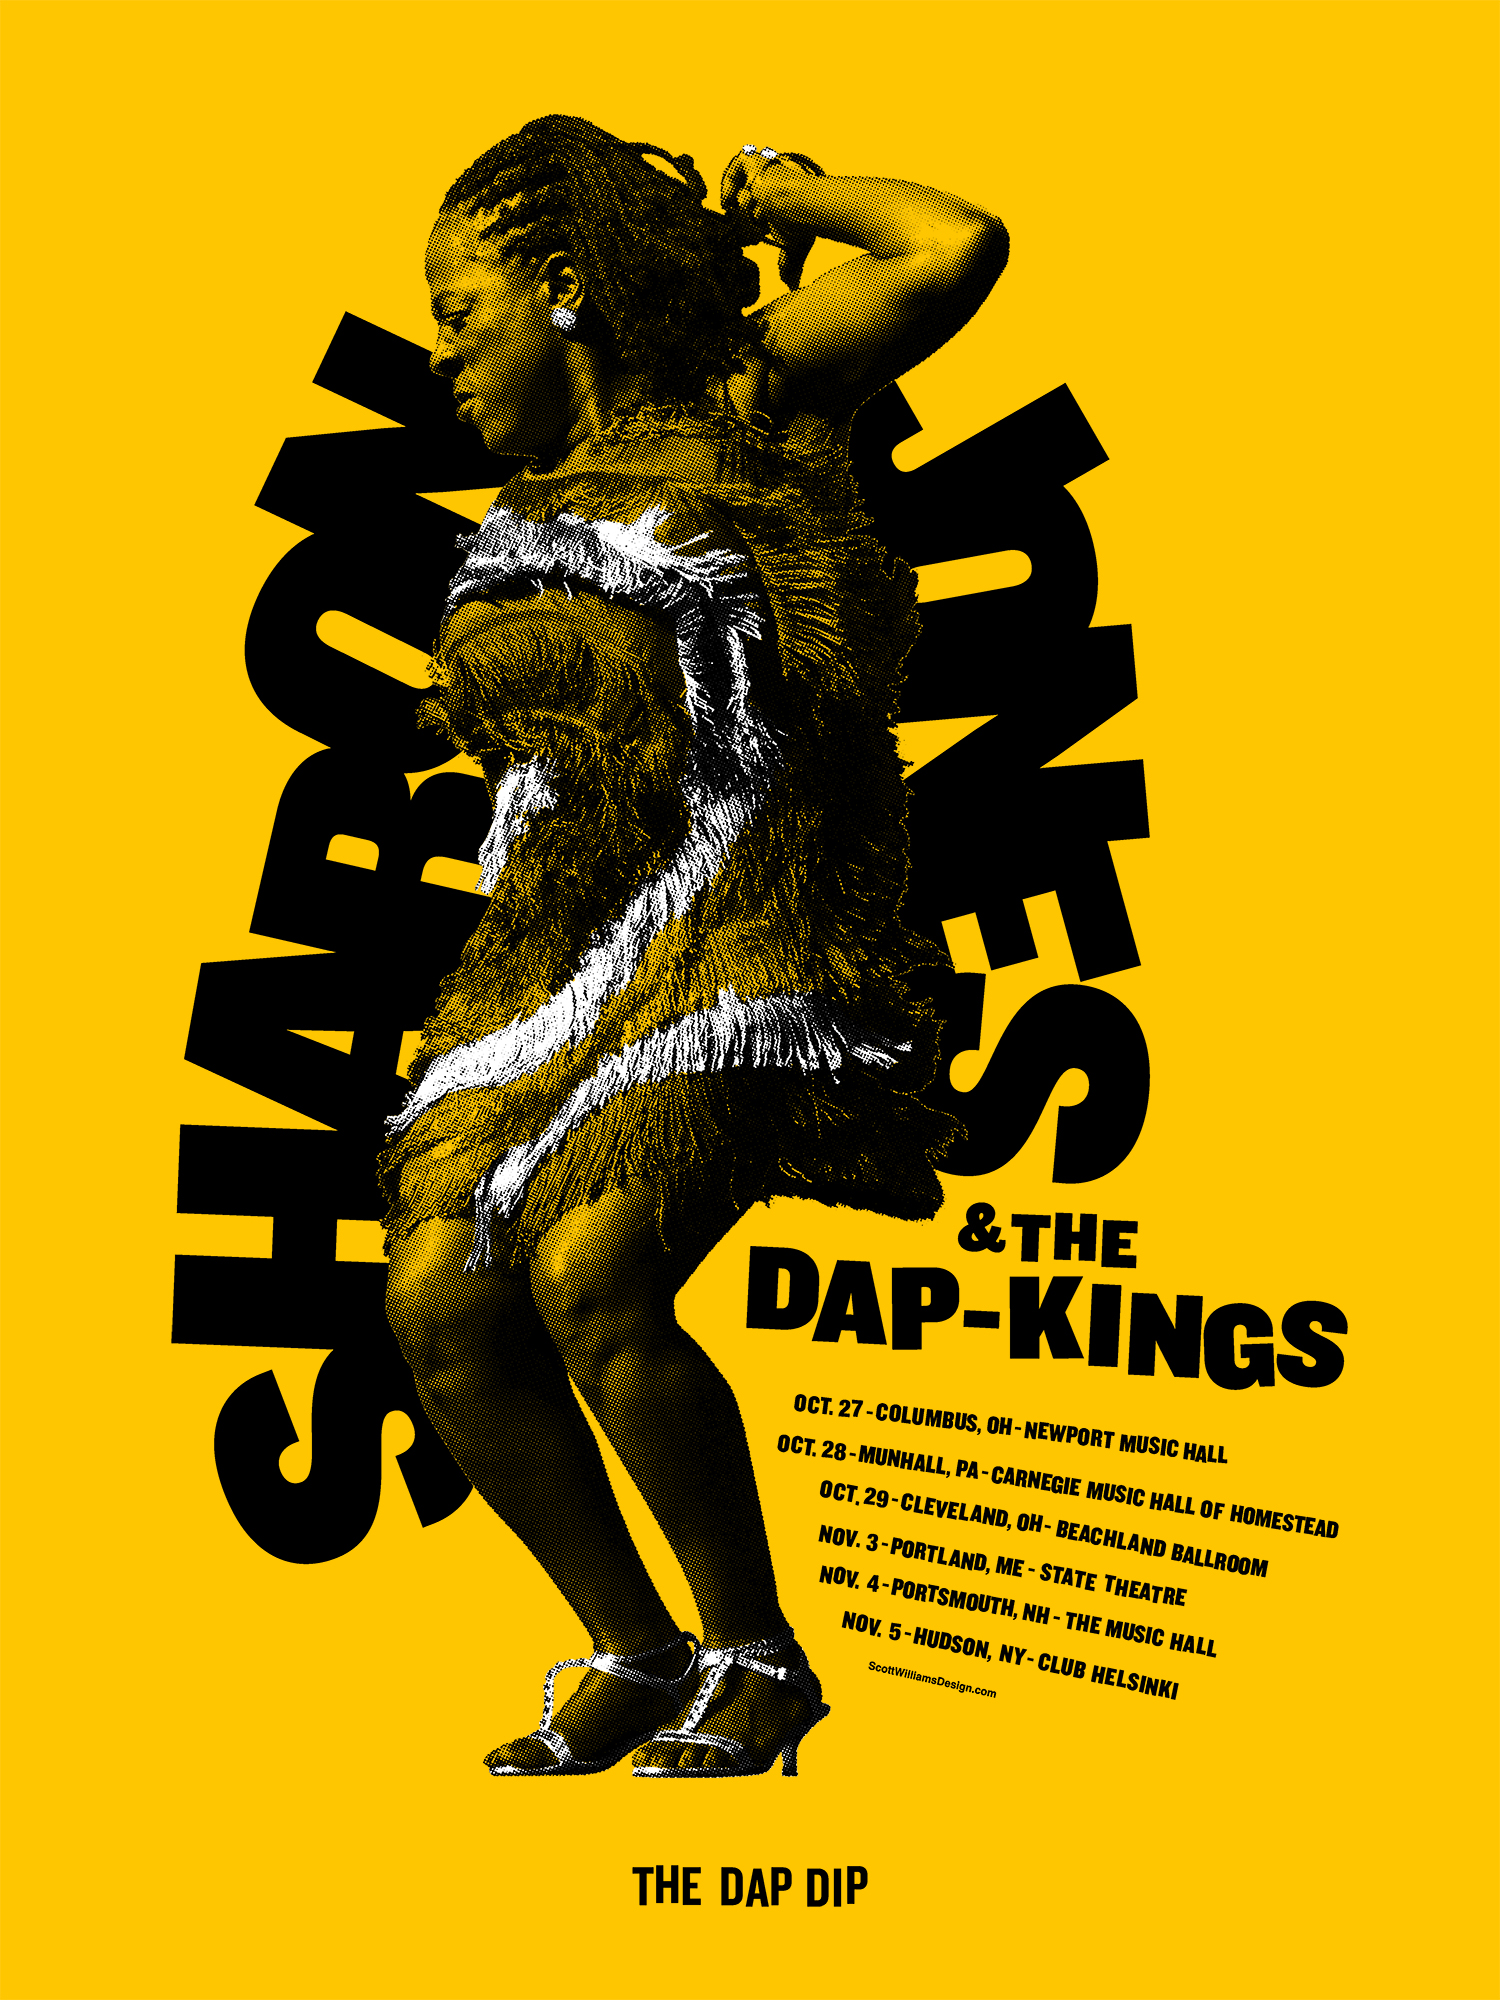 Sharon Jones & the Dap-Kings Dip" — SWILL DESIGN